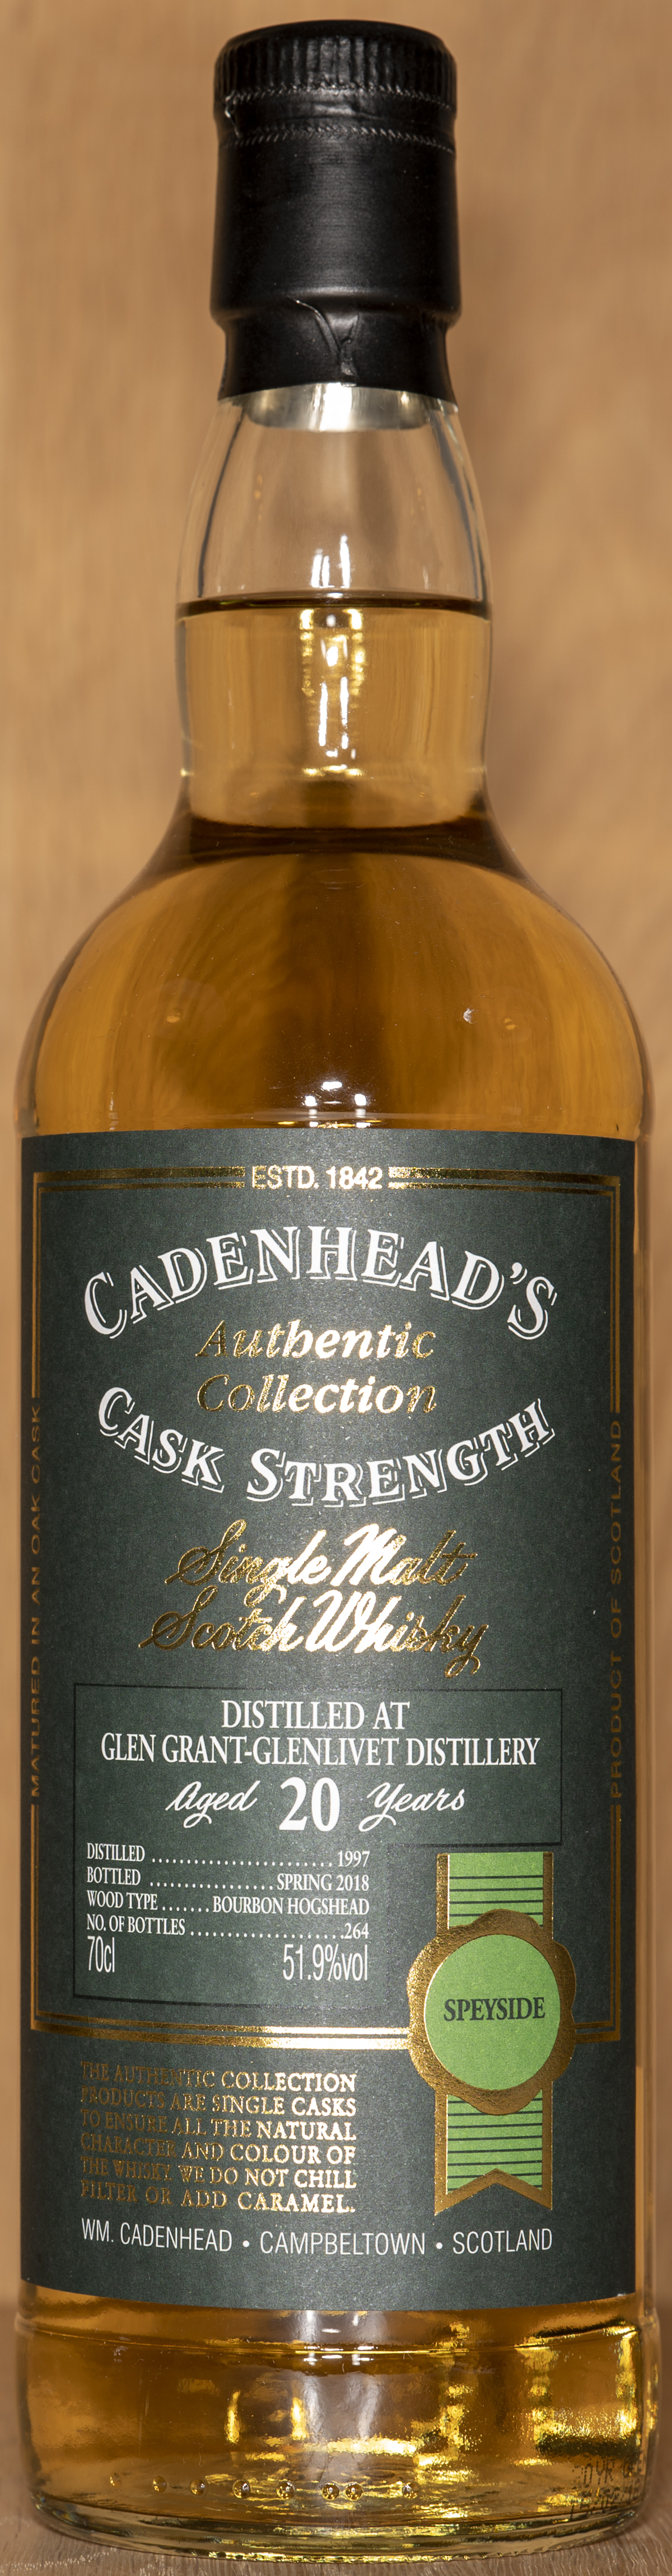 Billede: DSC_5020 - Cadenheads Authentic Collection Glen Grant 20 - bottle front.jpg